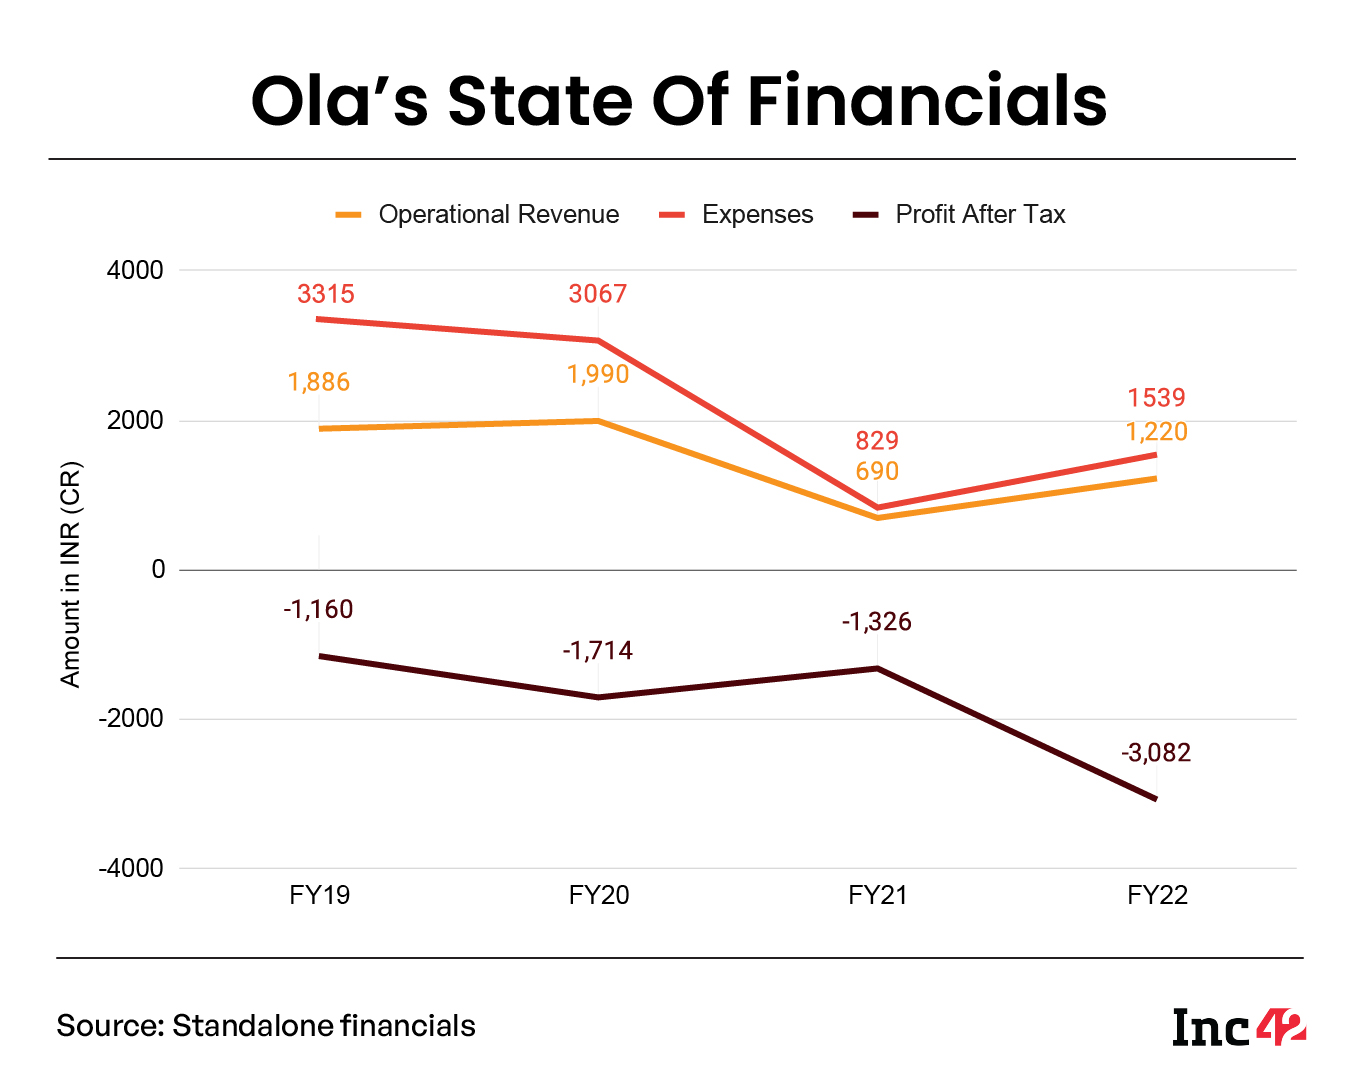 Ola financials; can prime plus fix heavy losses?